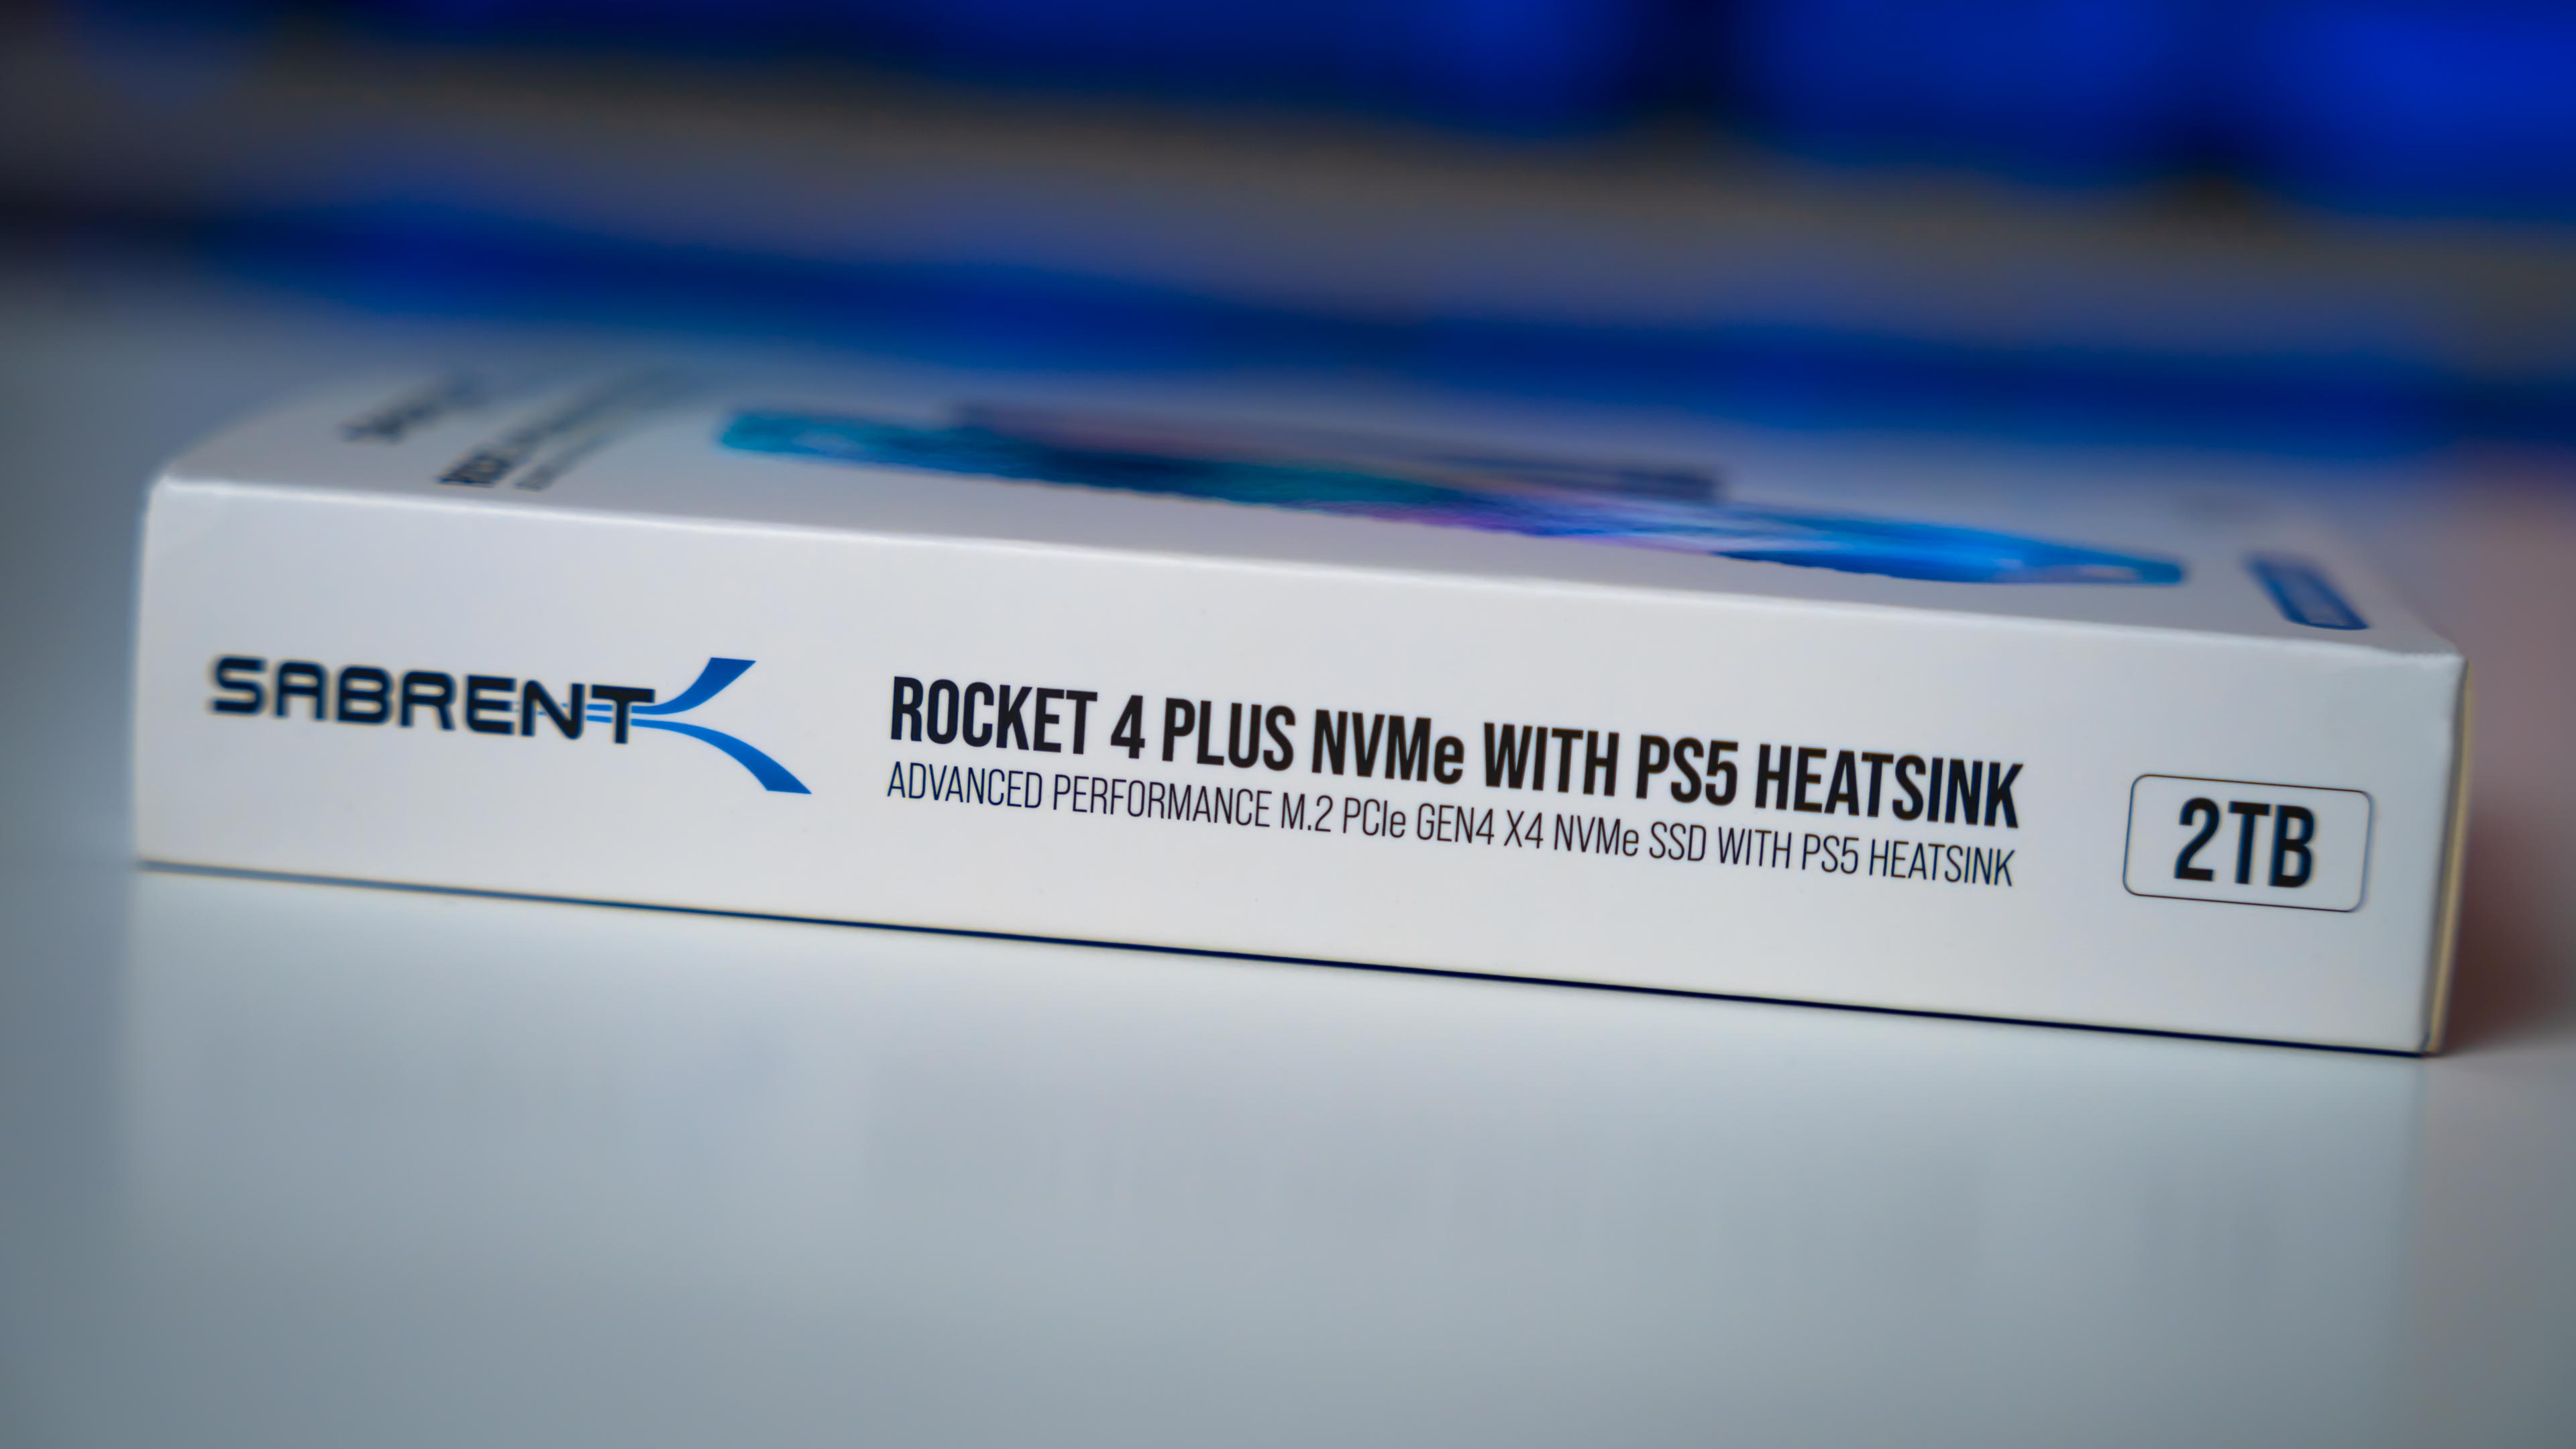 Sabrent Rocket 4 Plus PS5 Heatsink Box (3)